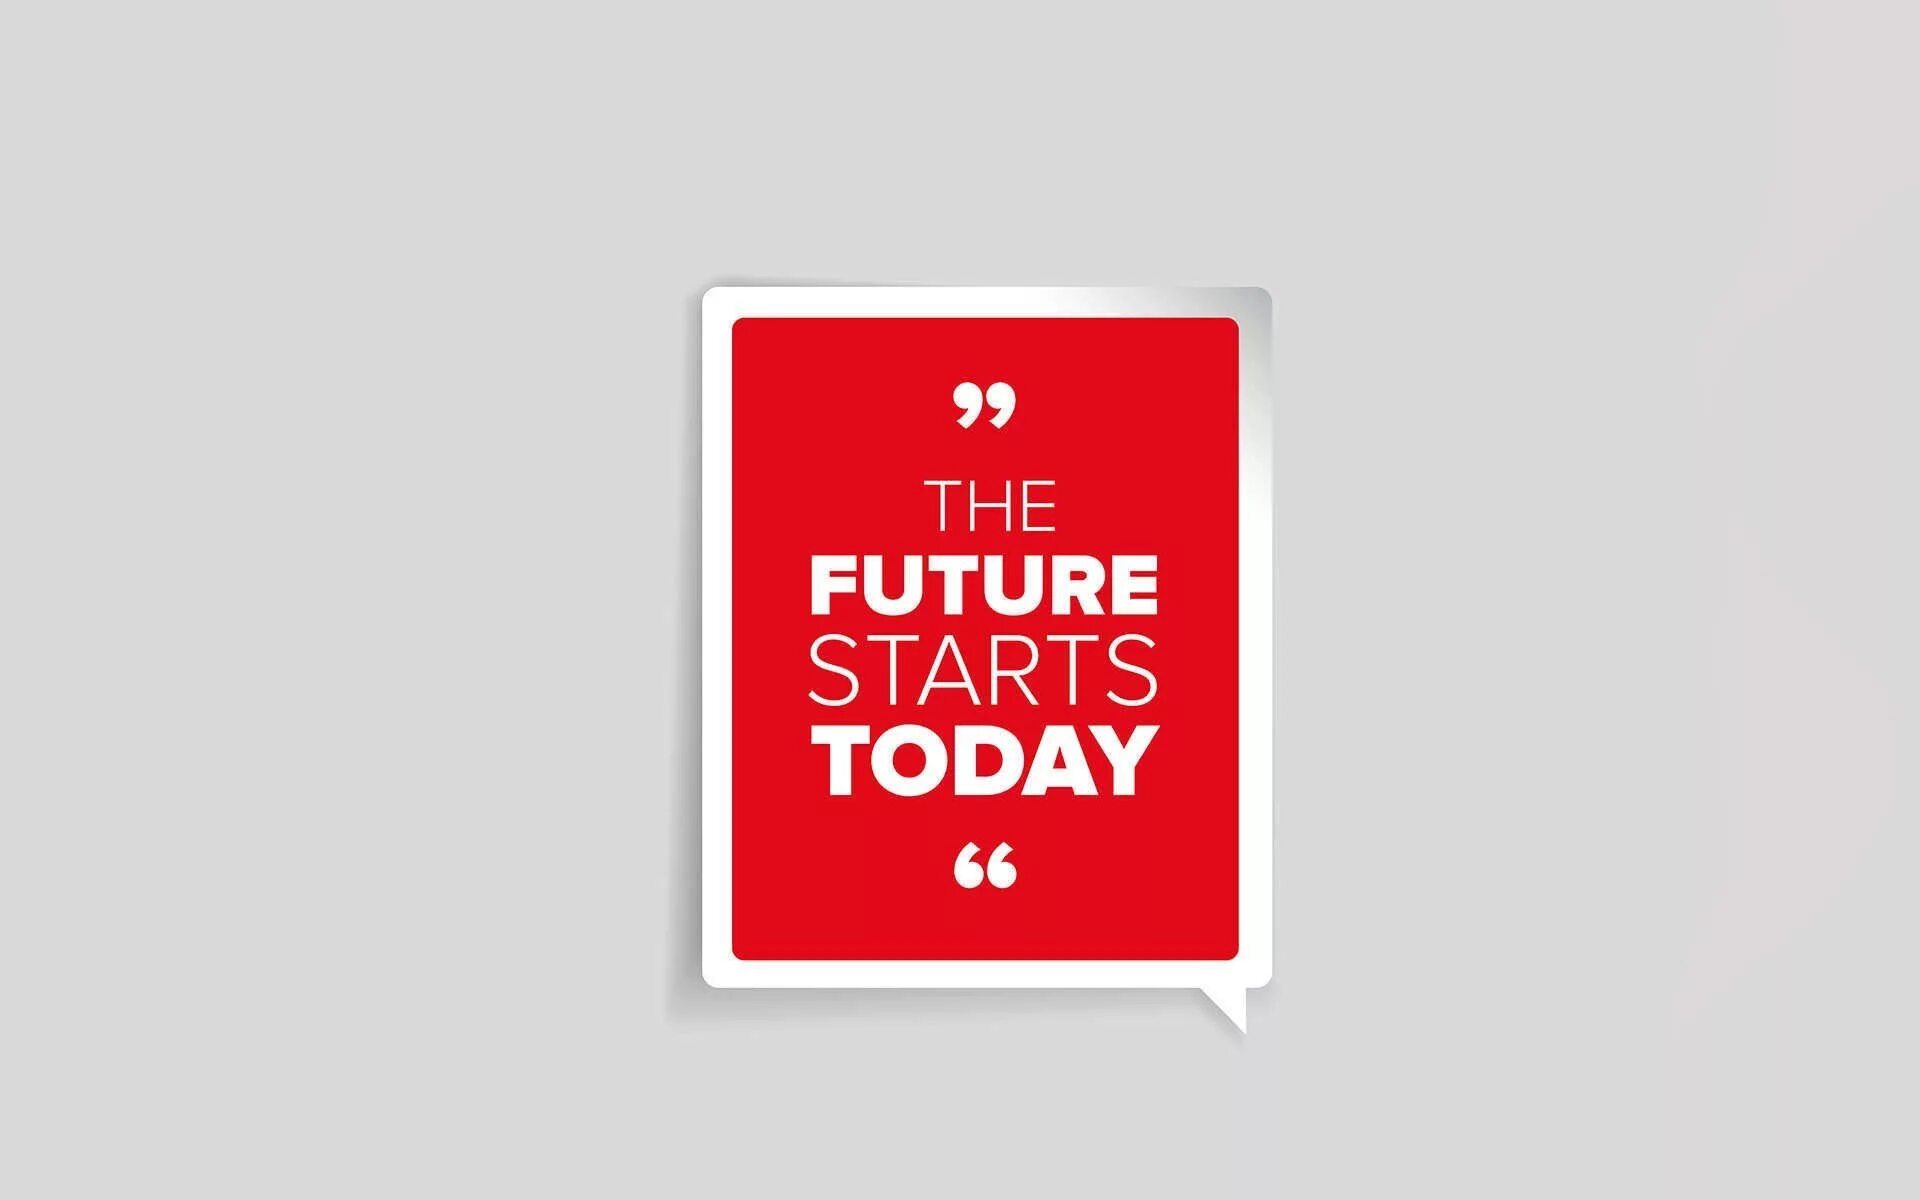 Take your future. Start today обои. Мотивационный обои start today. The Future starts today. Today is обои.